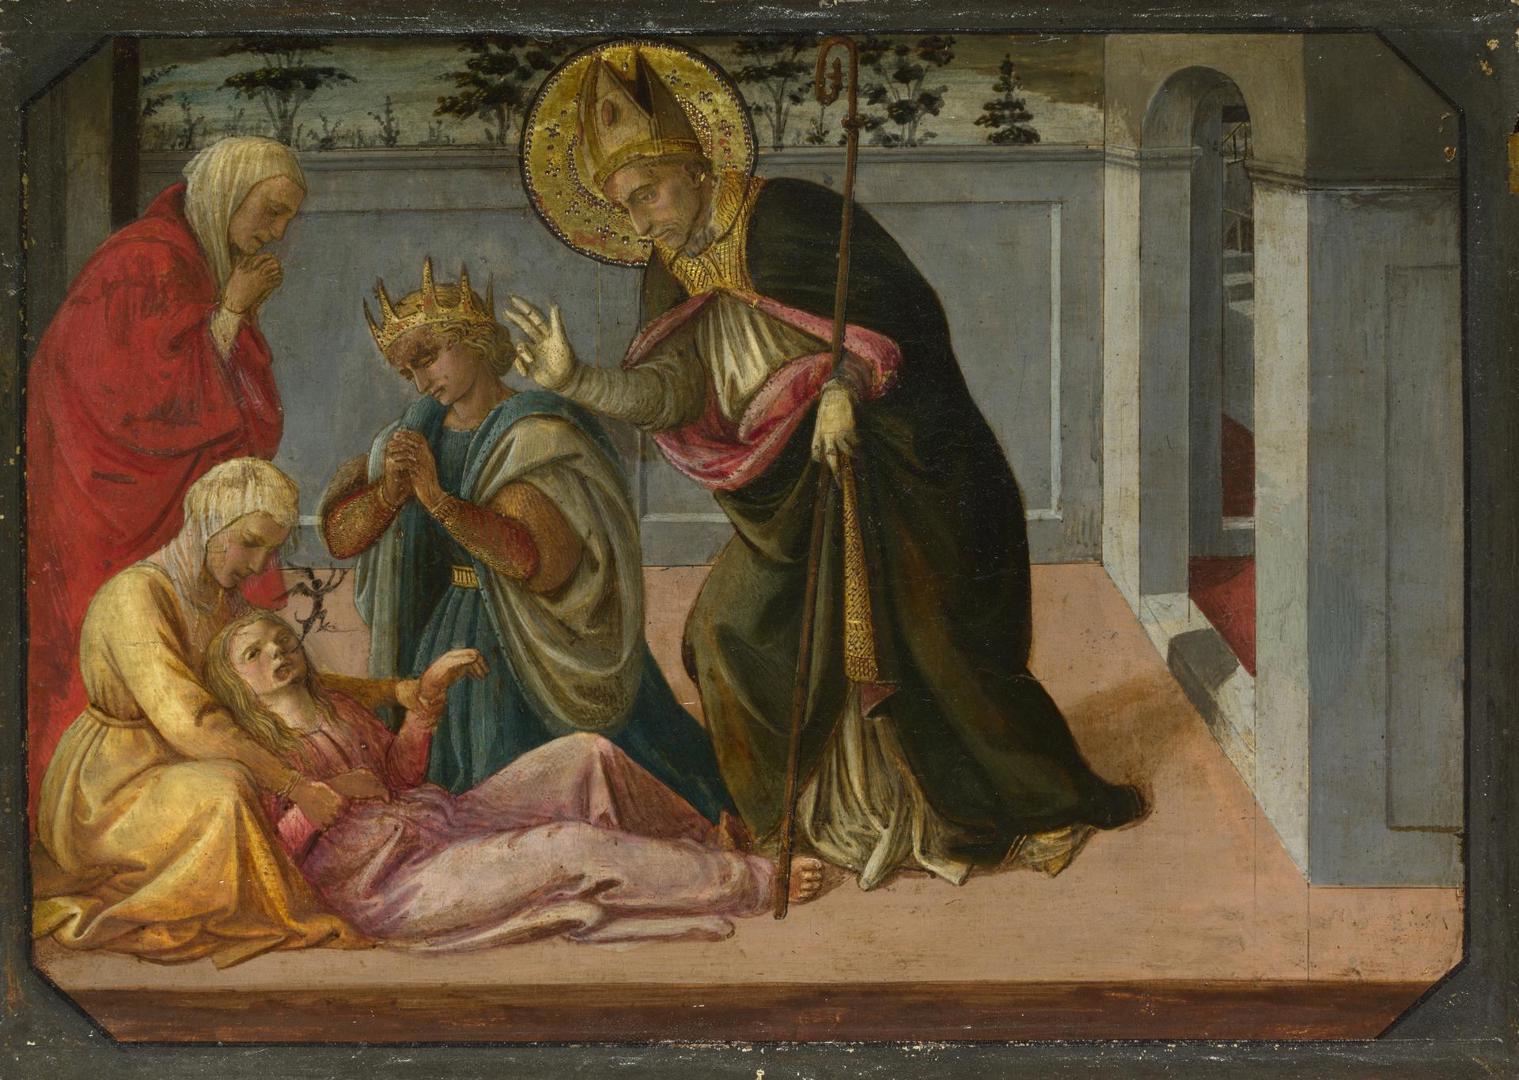 Saint Zeno exorcising the Daughter of Gallienus by Fra Filippo Lippi and workshop